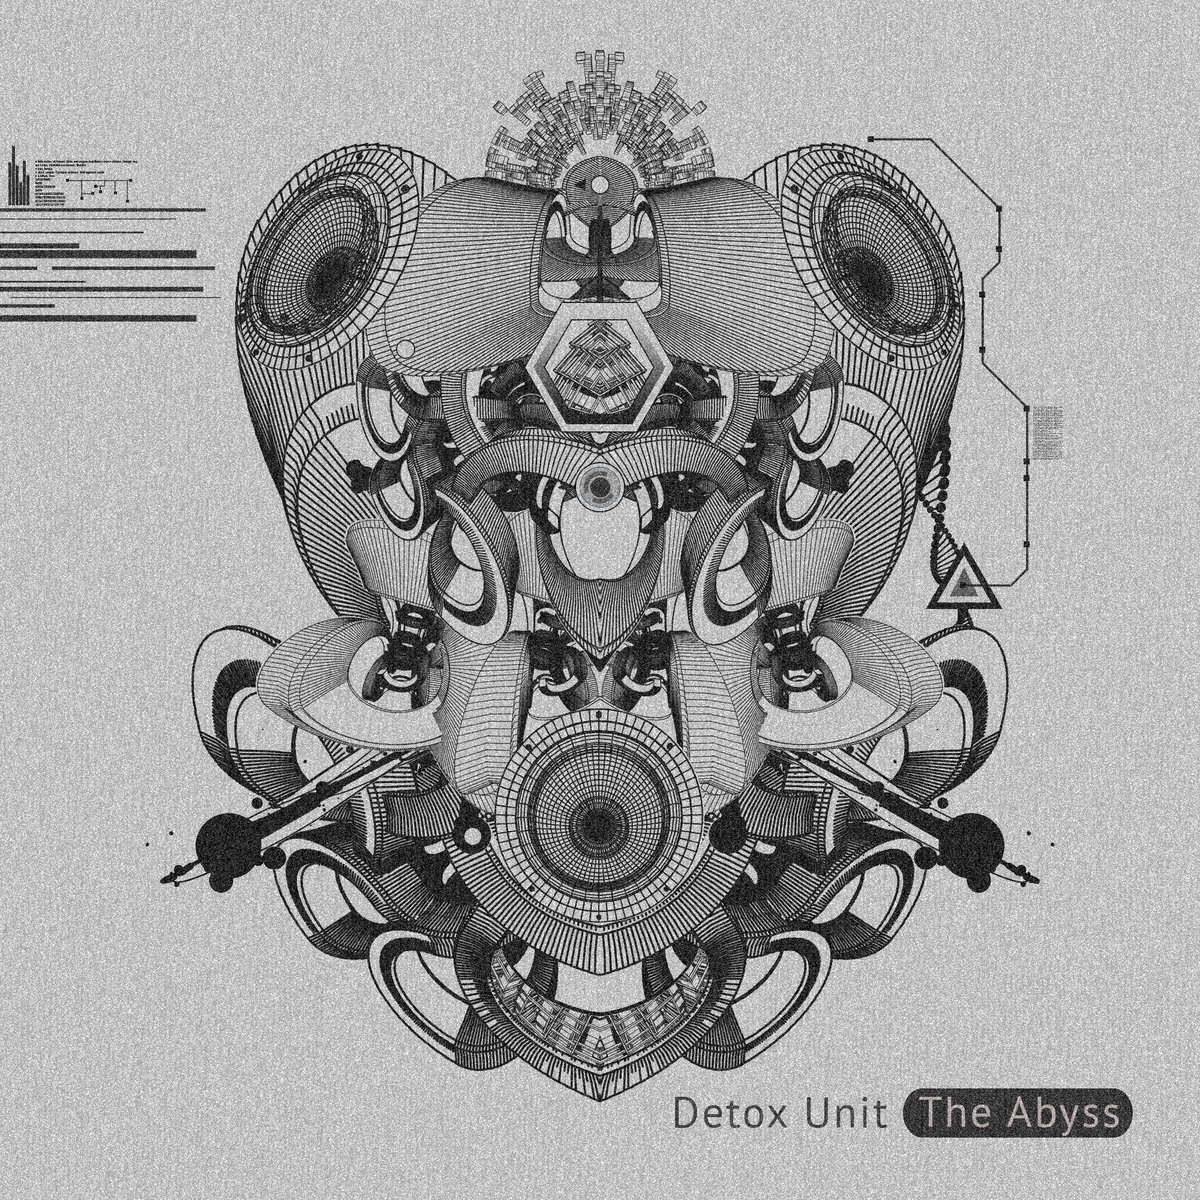 Detox Unit - The Abyss (artwork)